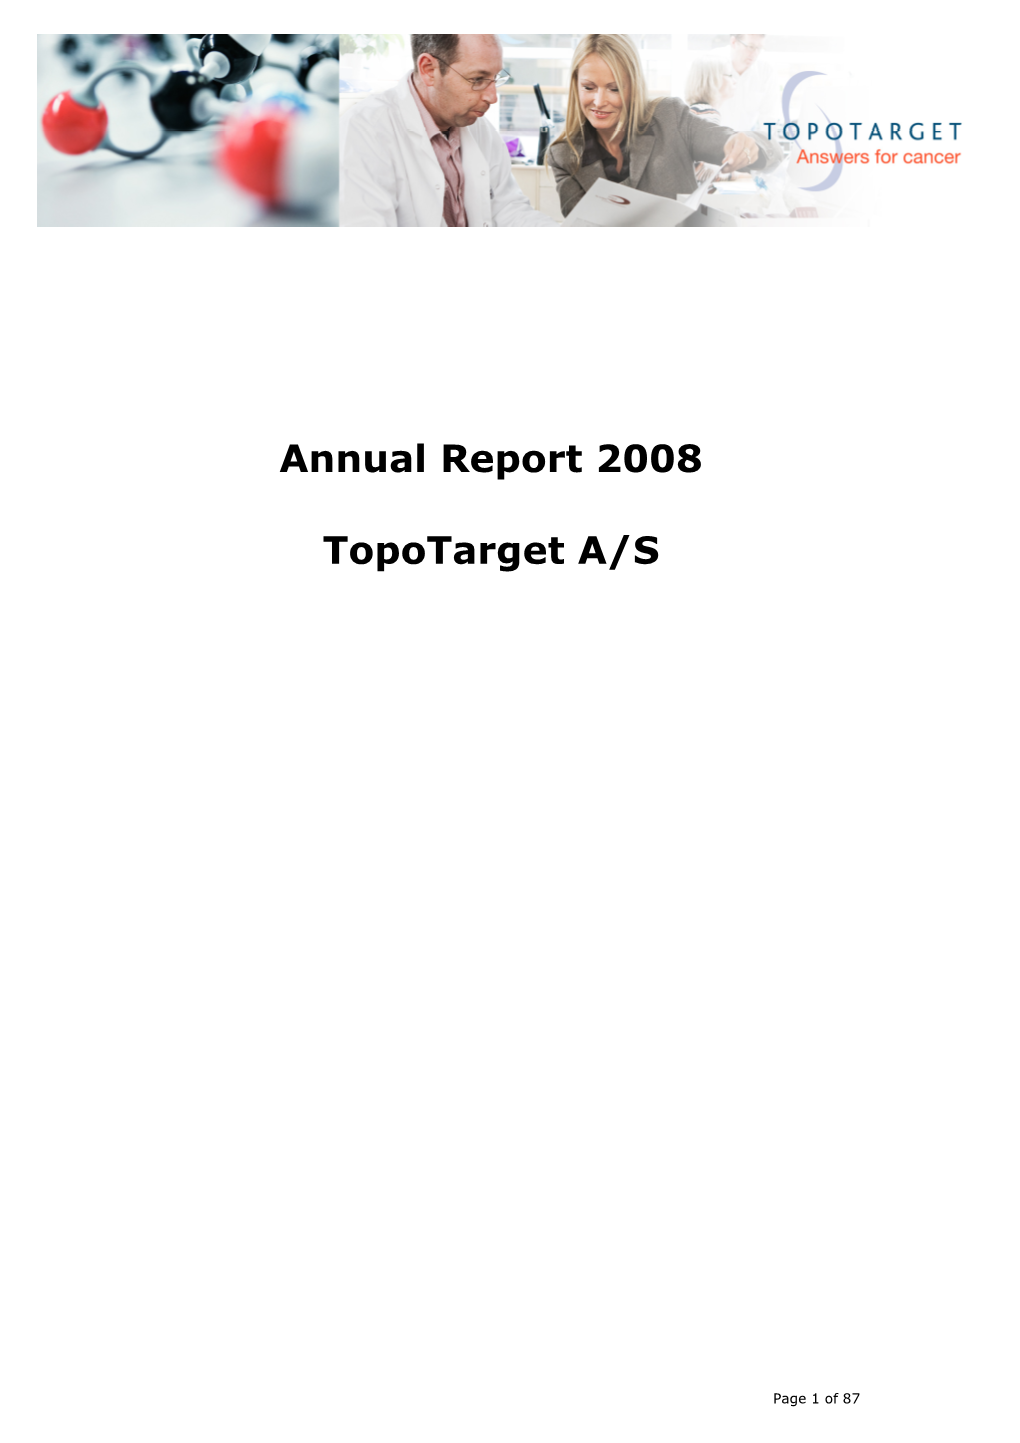 Annual Report 2008 Topotarget